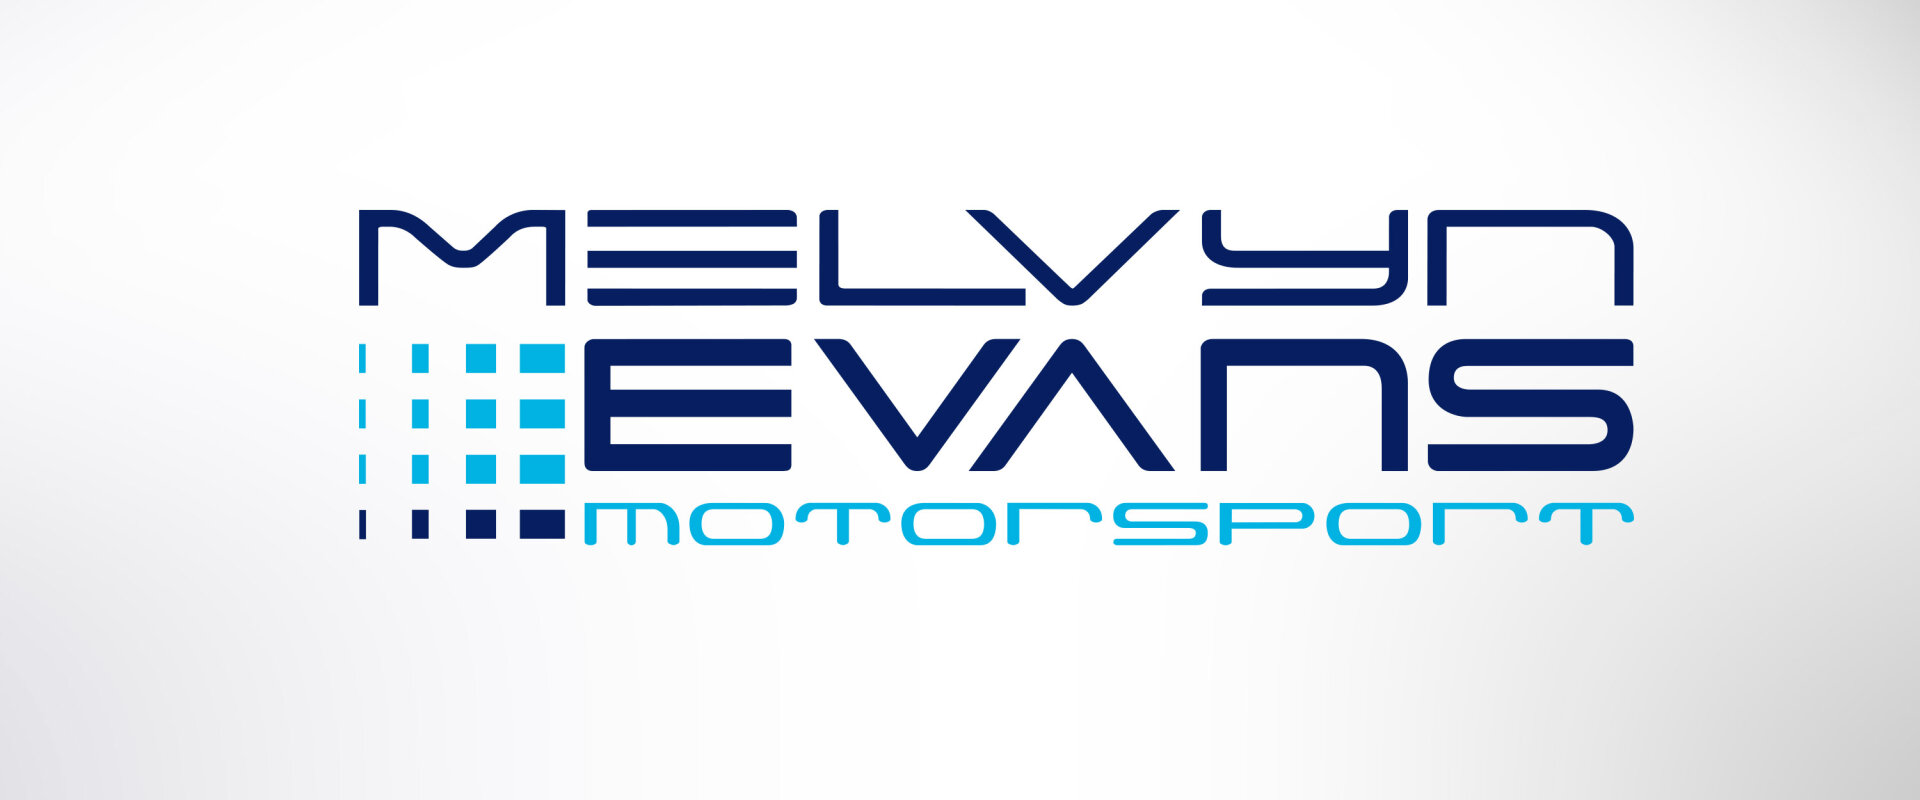 Melvyn Evans Motorsport #1